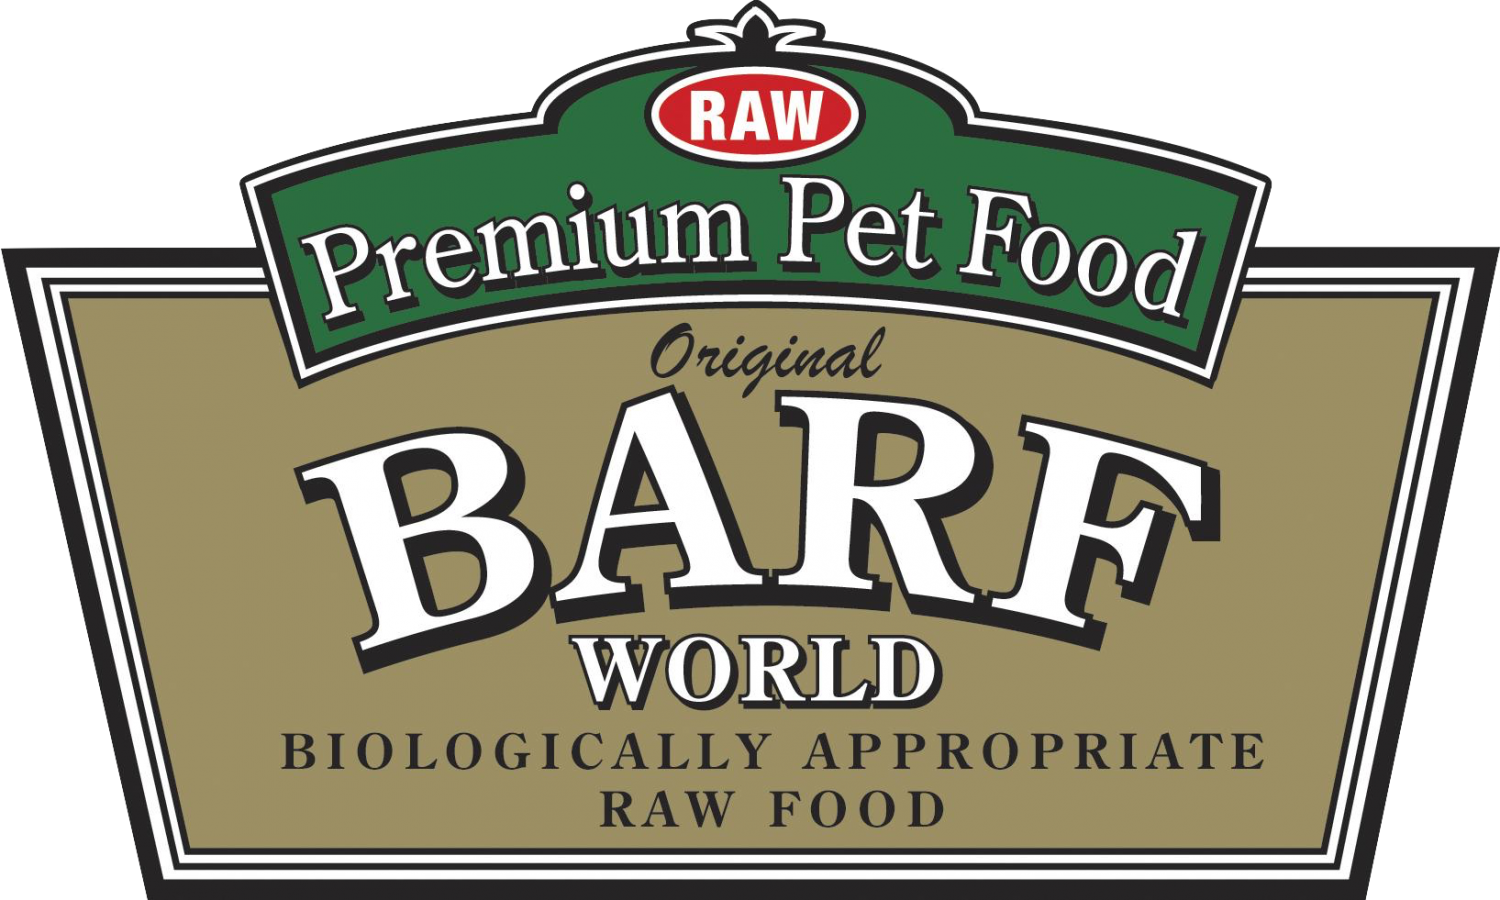 BARF - Biologically Appropriate Raw Food